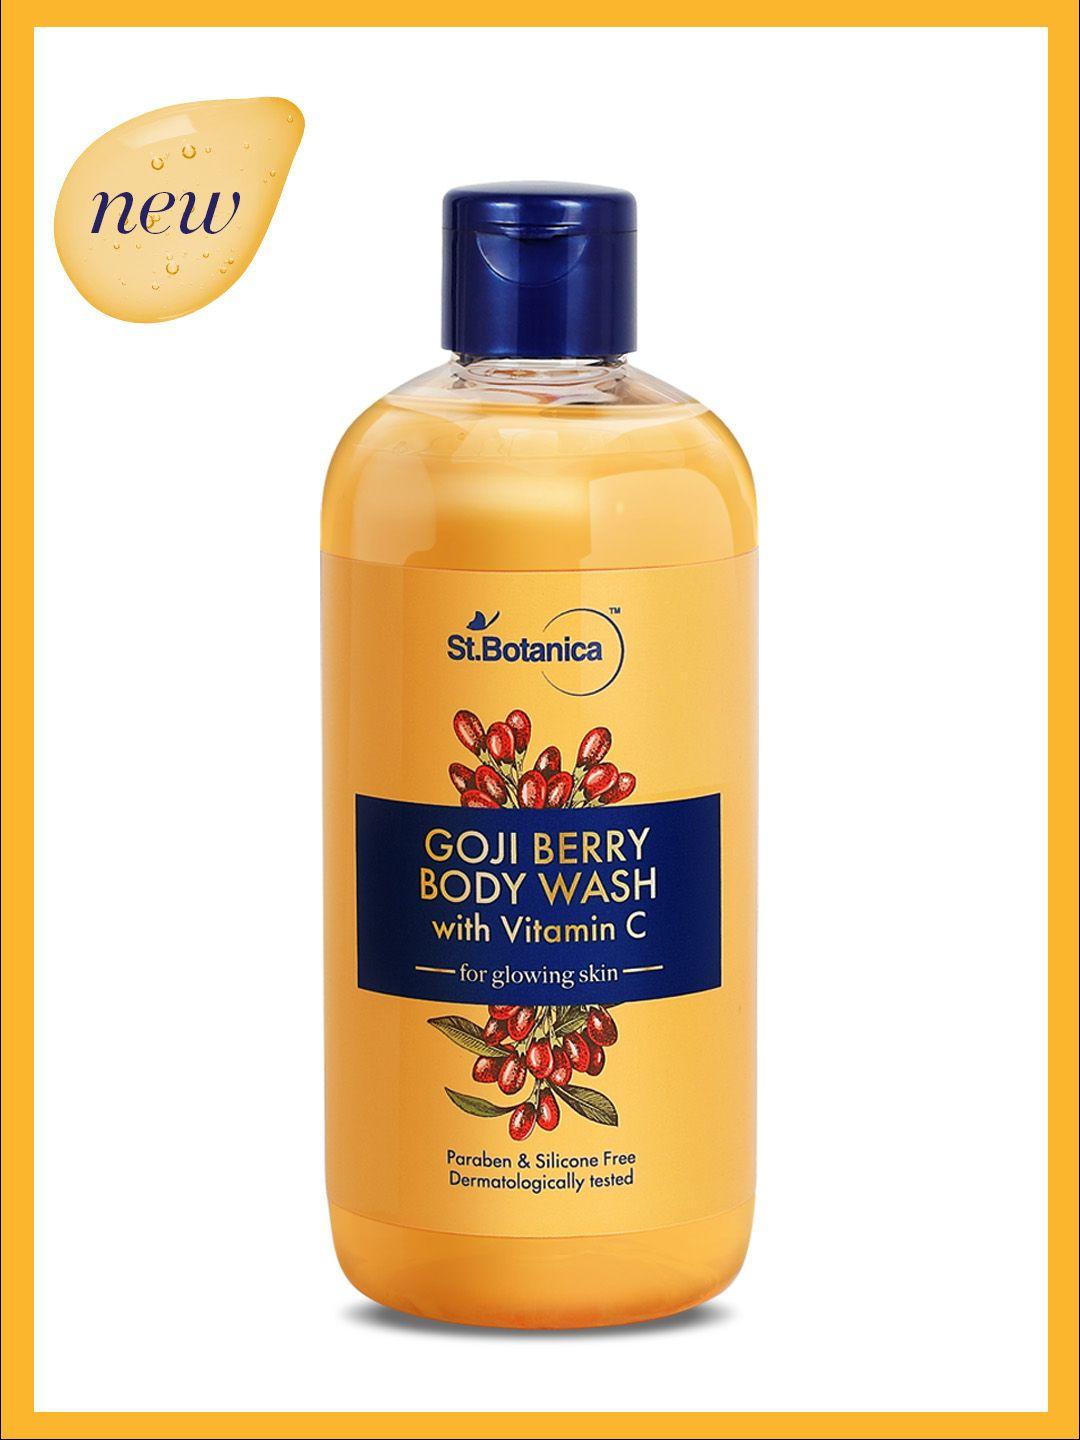 st.botanica-goji-berry-&-vitamin-c-body-wash-for-fresh-&-glowing-skin---300ml